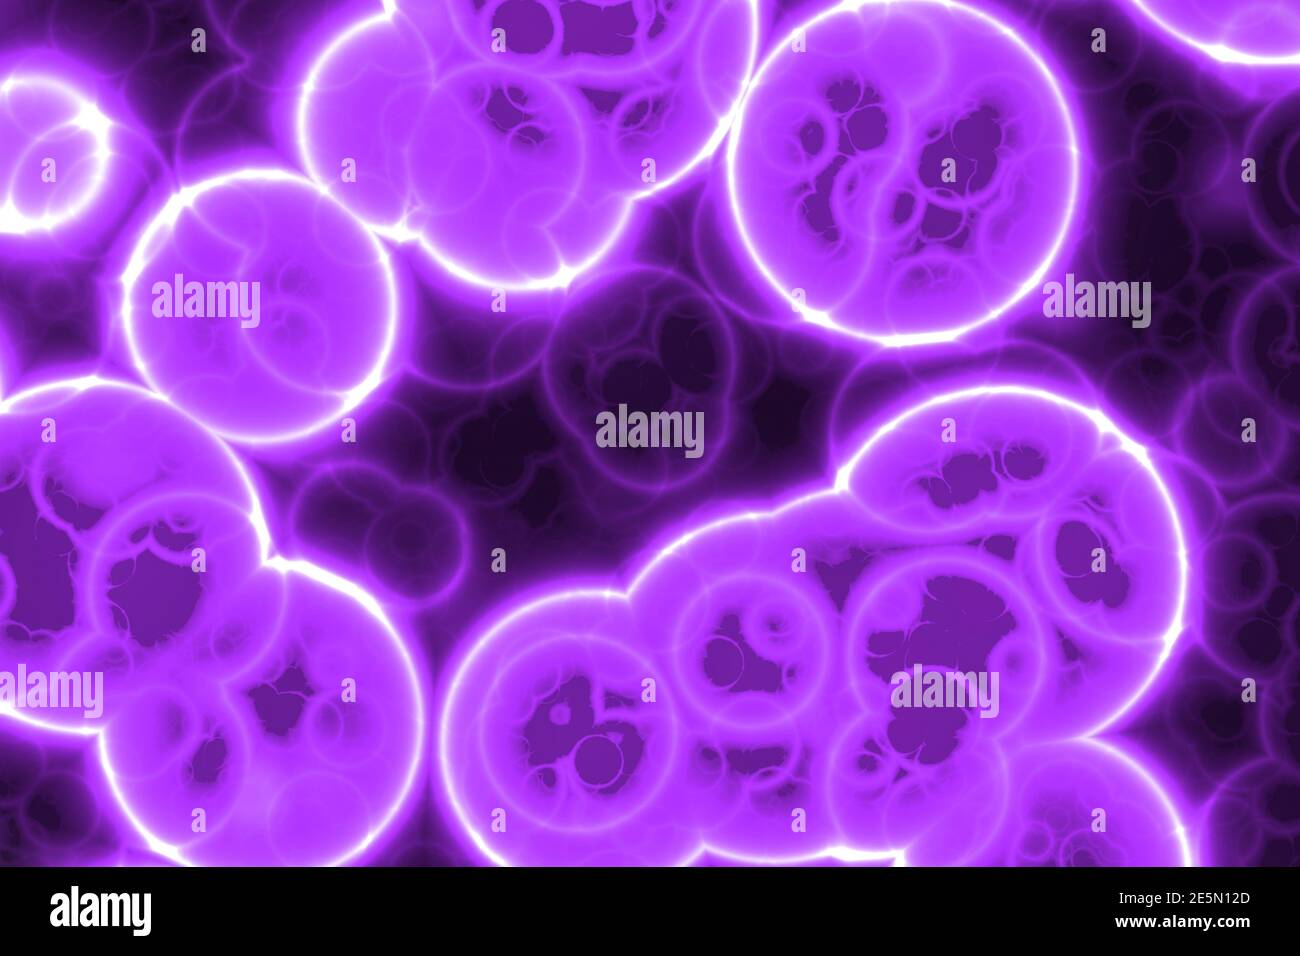 design amazing purple many bio primitive organisms digital graphic background texture illustration Stock Photo